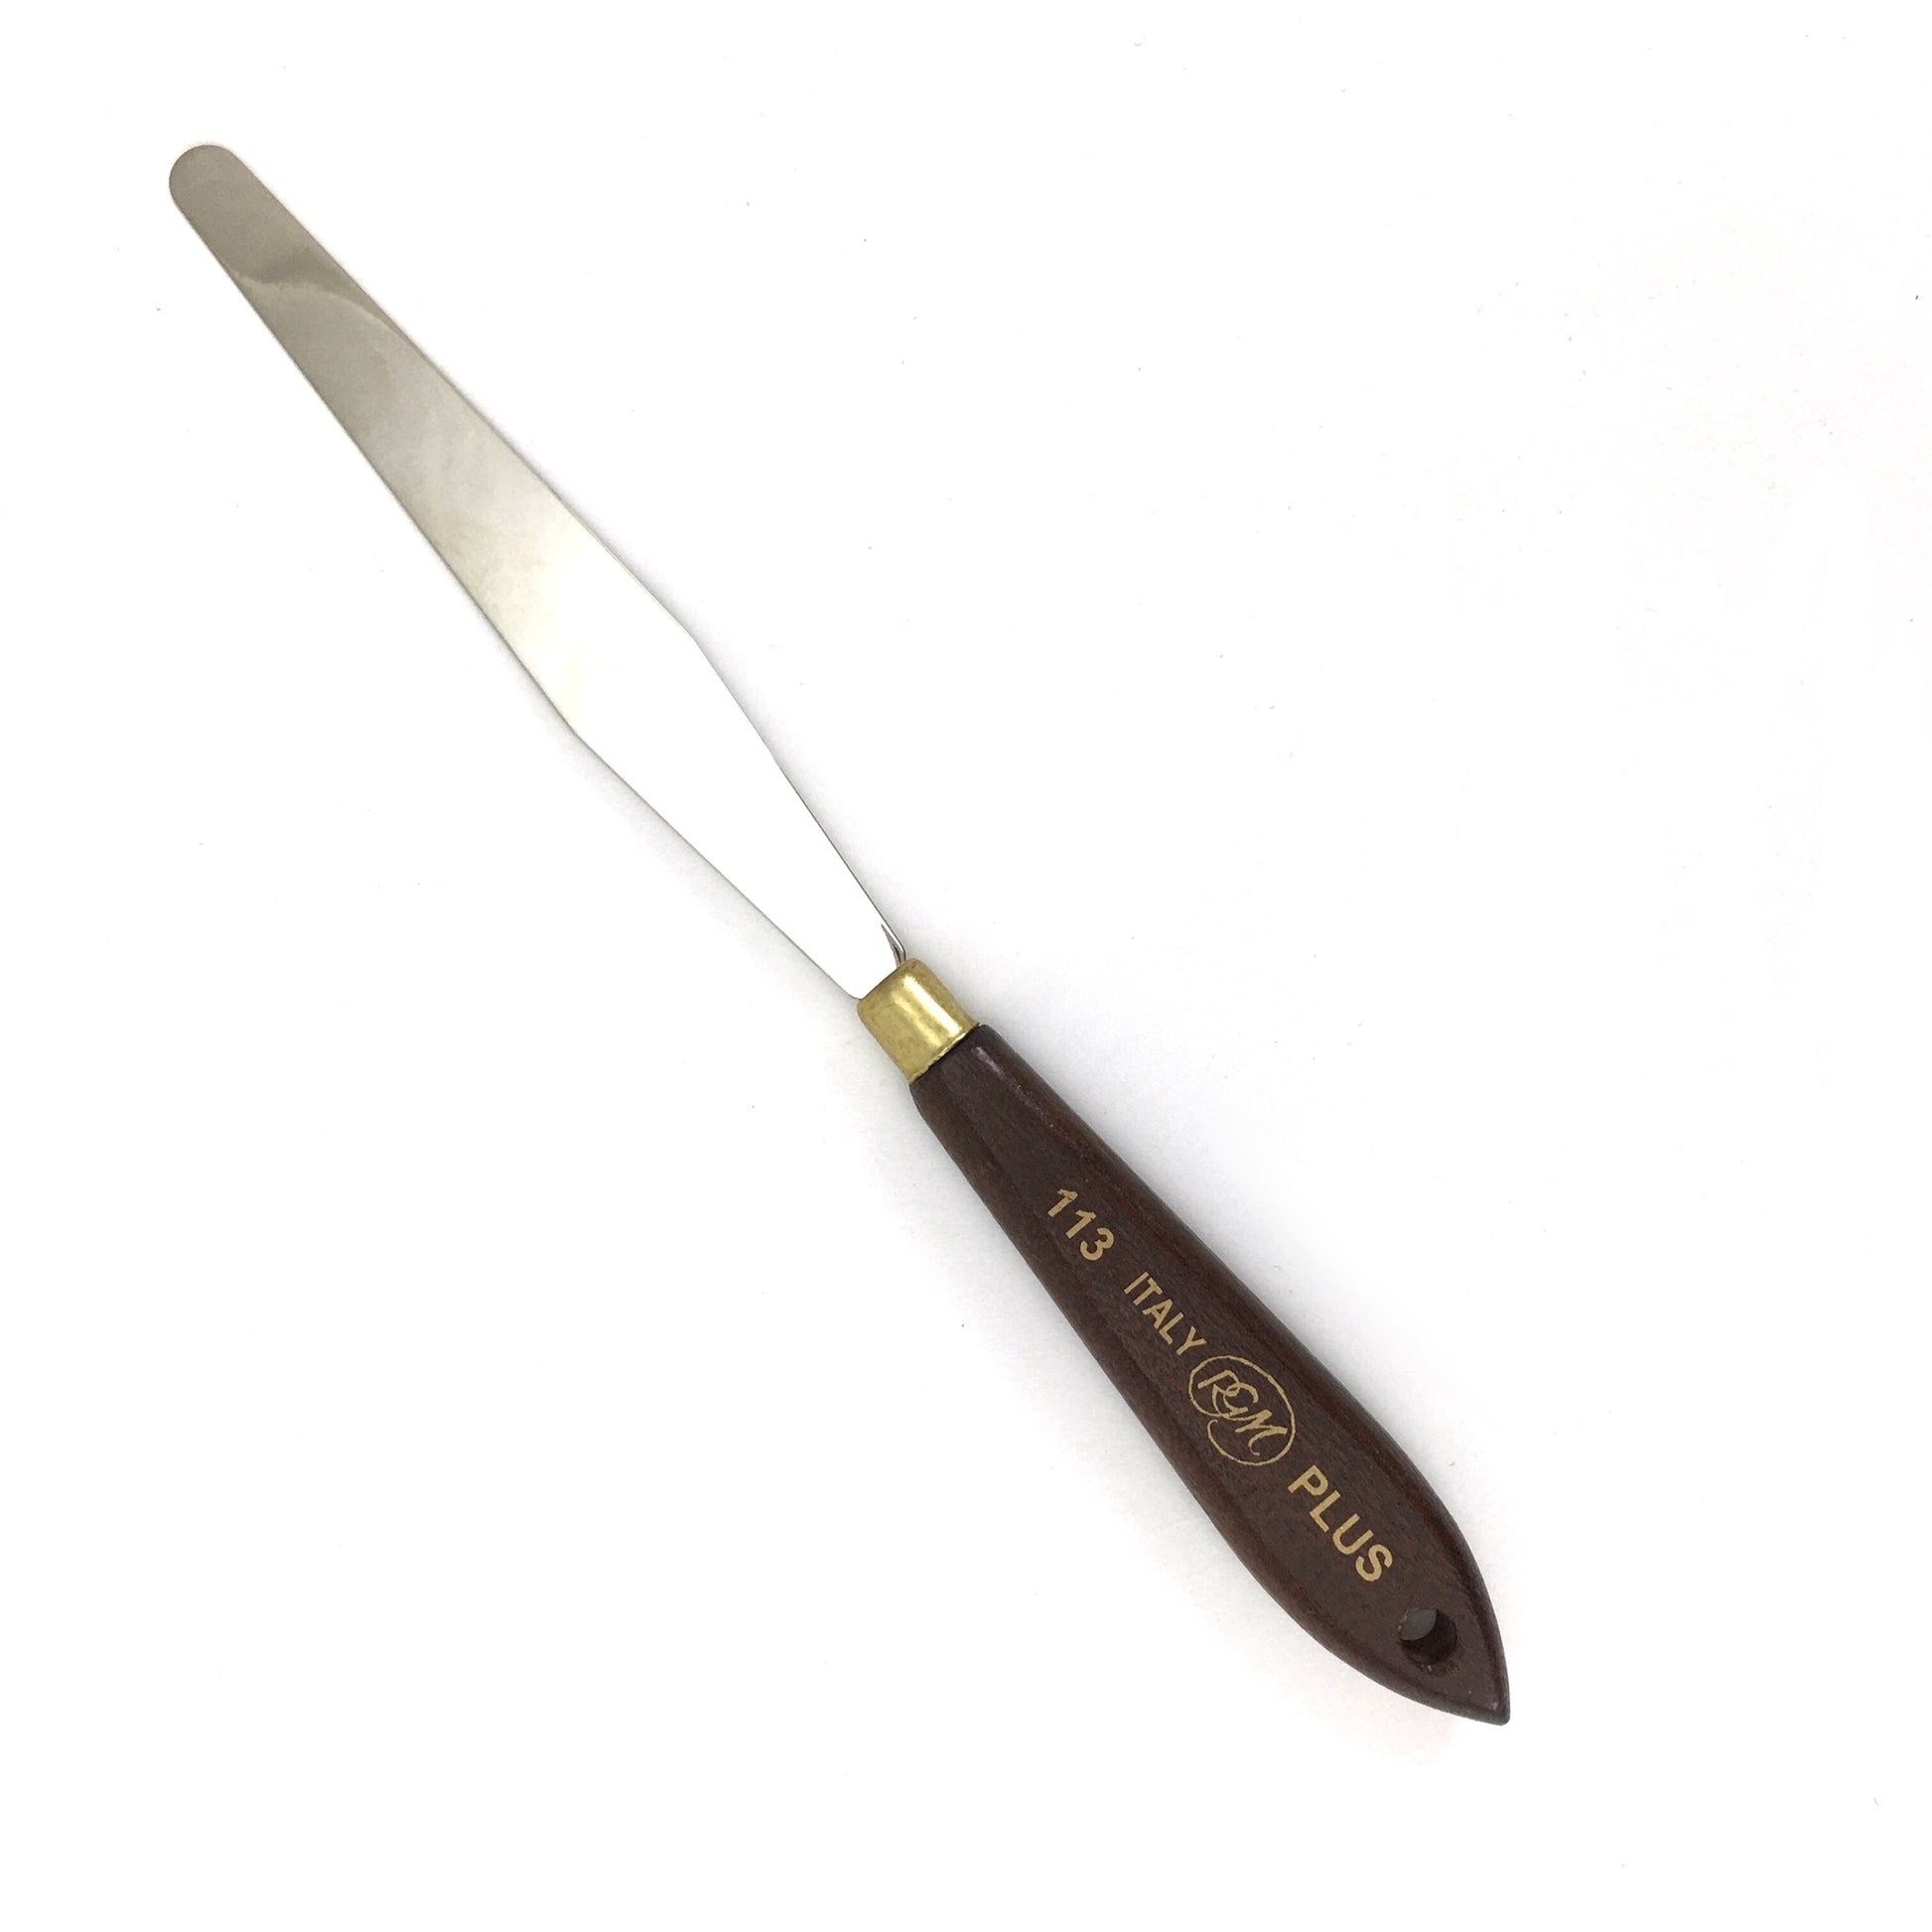 RGM Italian Plus Palette Knife / Painting Knife - #113 by RGM - K. A. Artist Shop